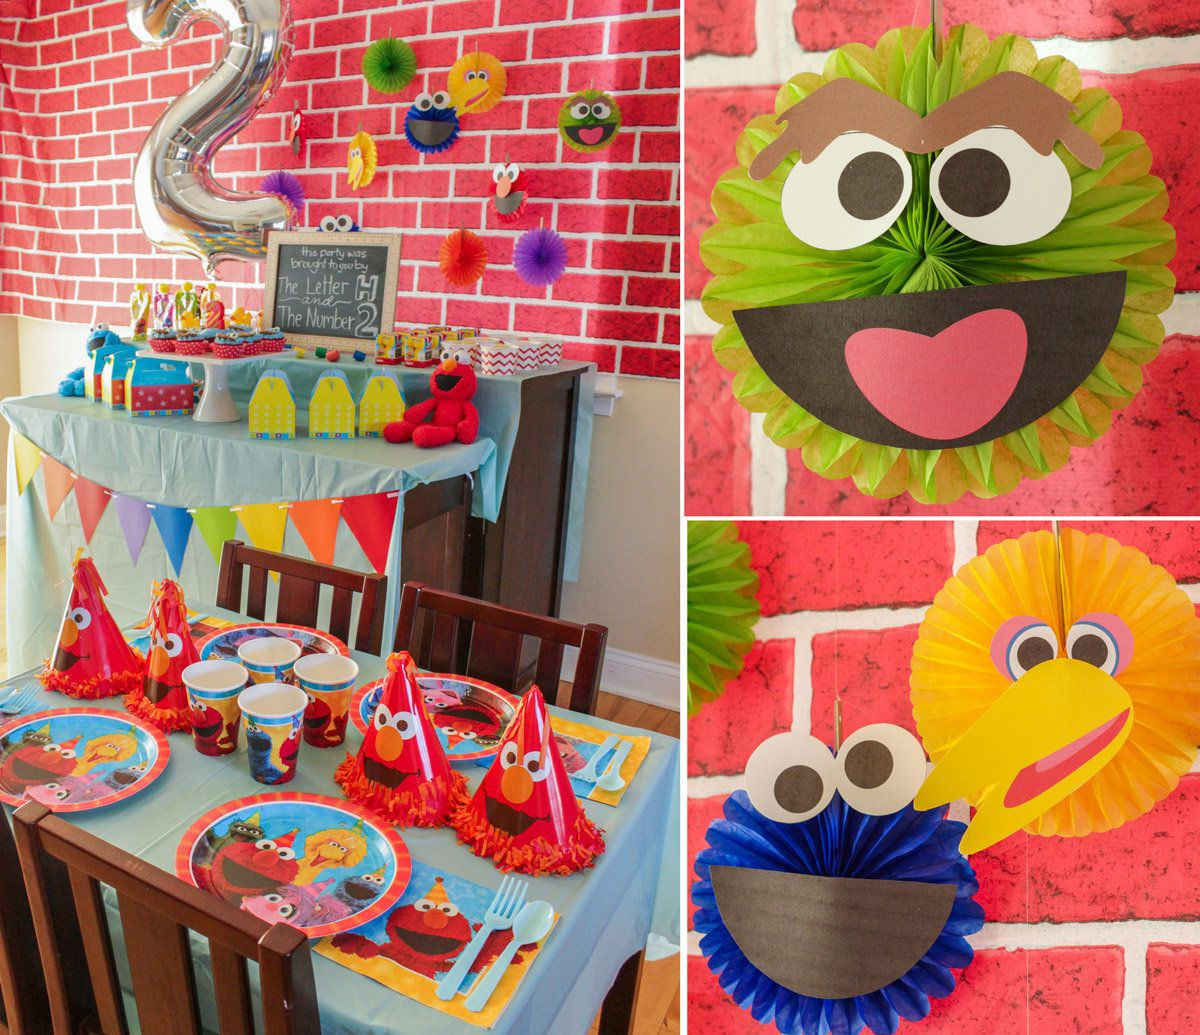 Sesame Street Birthday Party Supplies
 Sesame Street Party Ideas